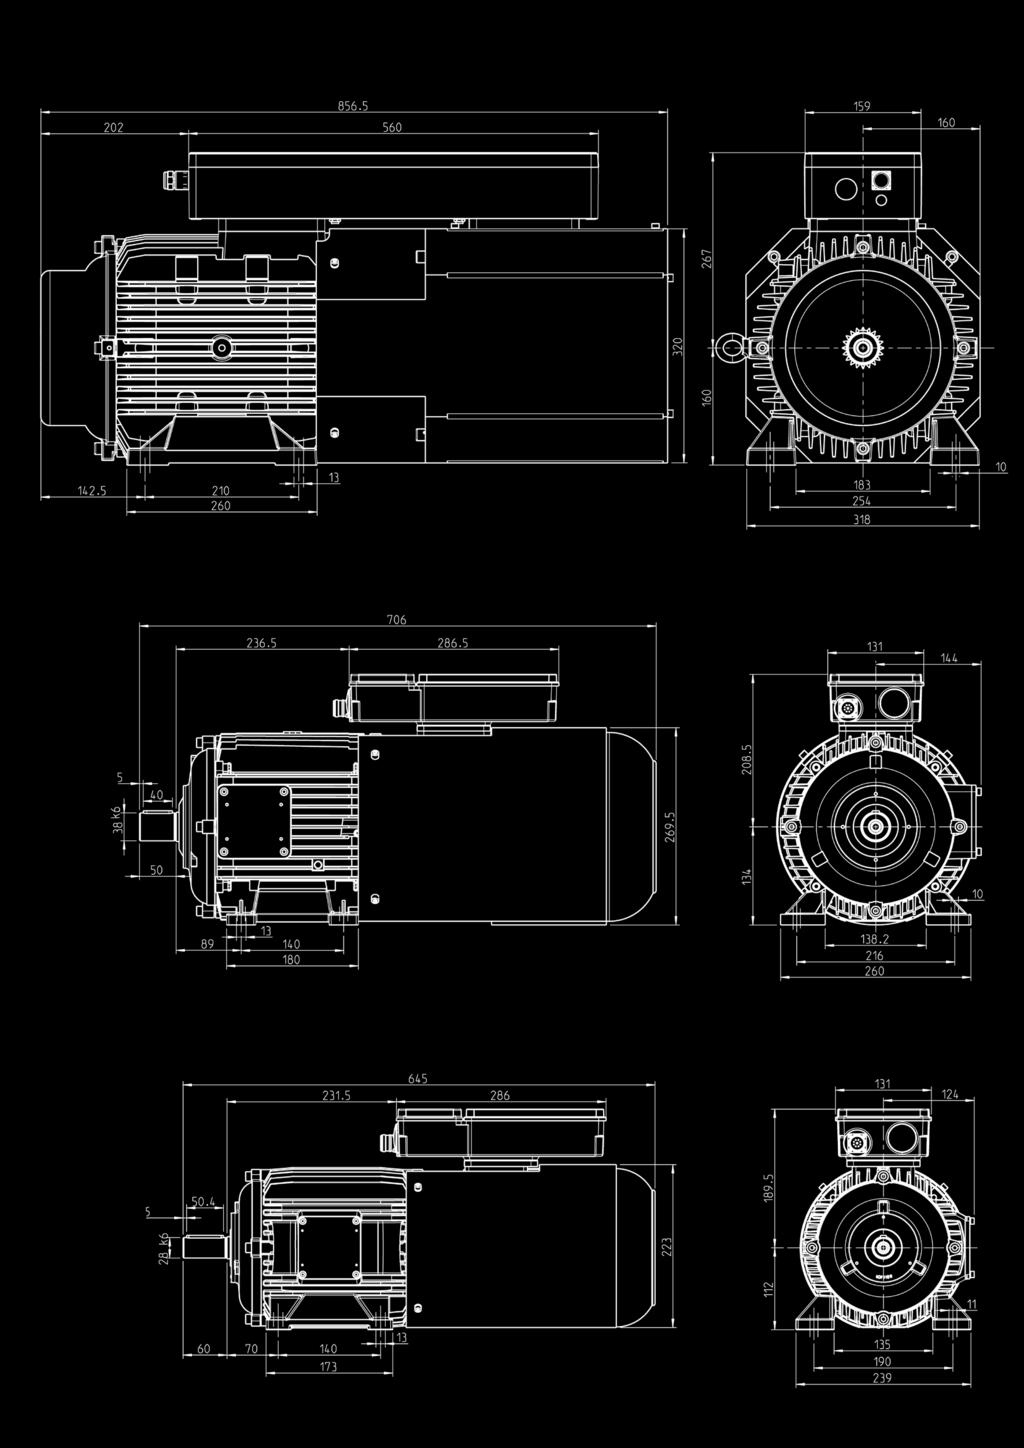 MOZELT GmbH & Co. KG. Dimensional drawings of generator Fig.